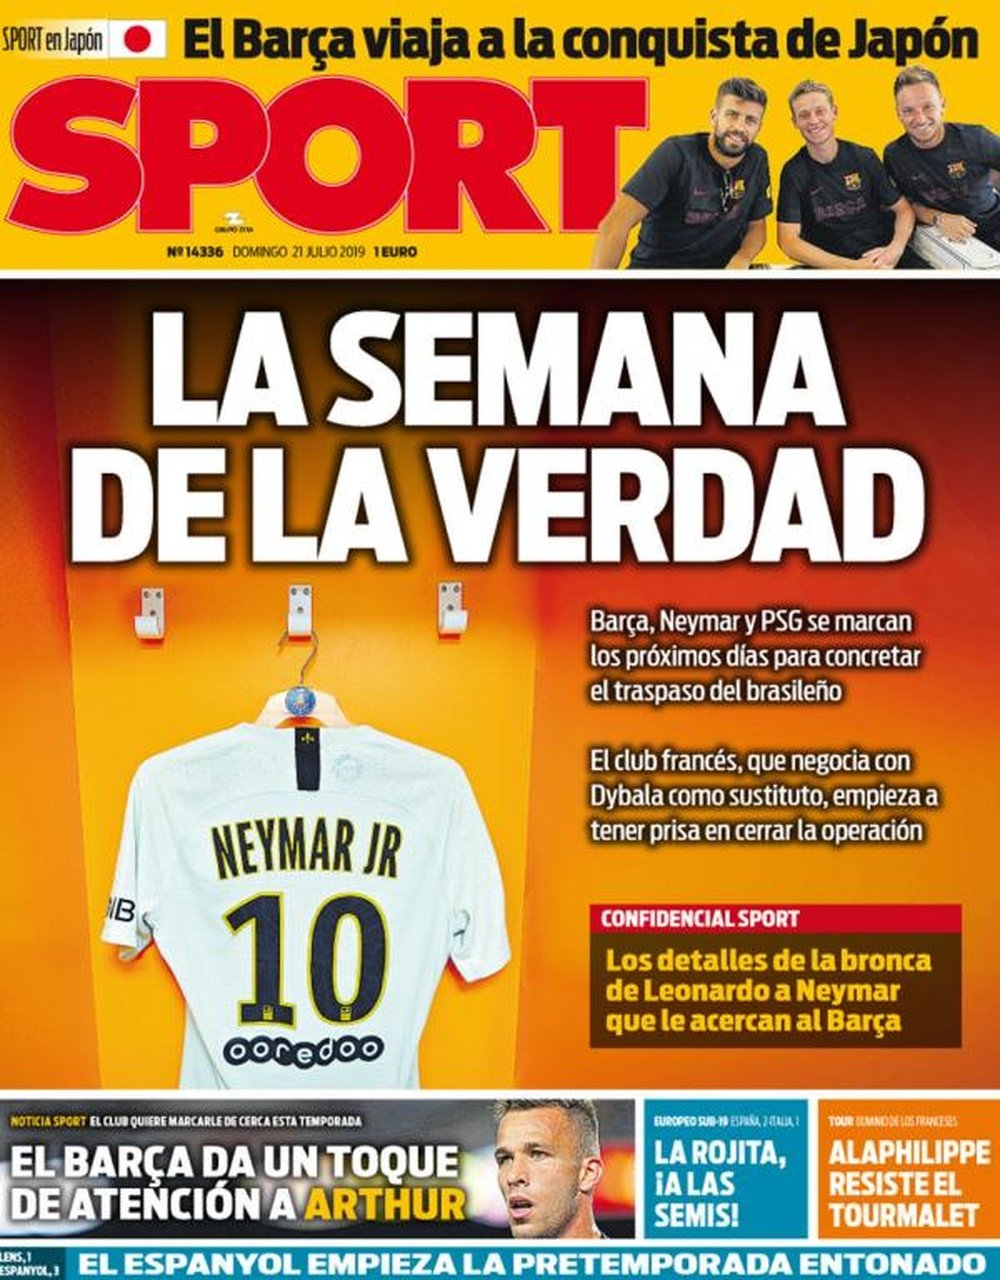 Capa do jornal Sport de 21-07-19. Sport